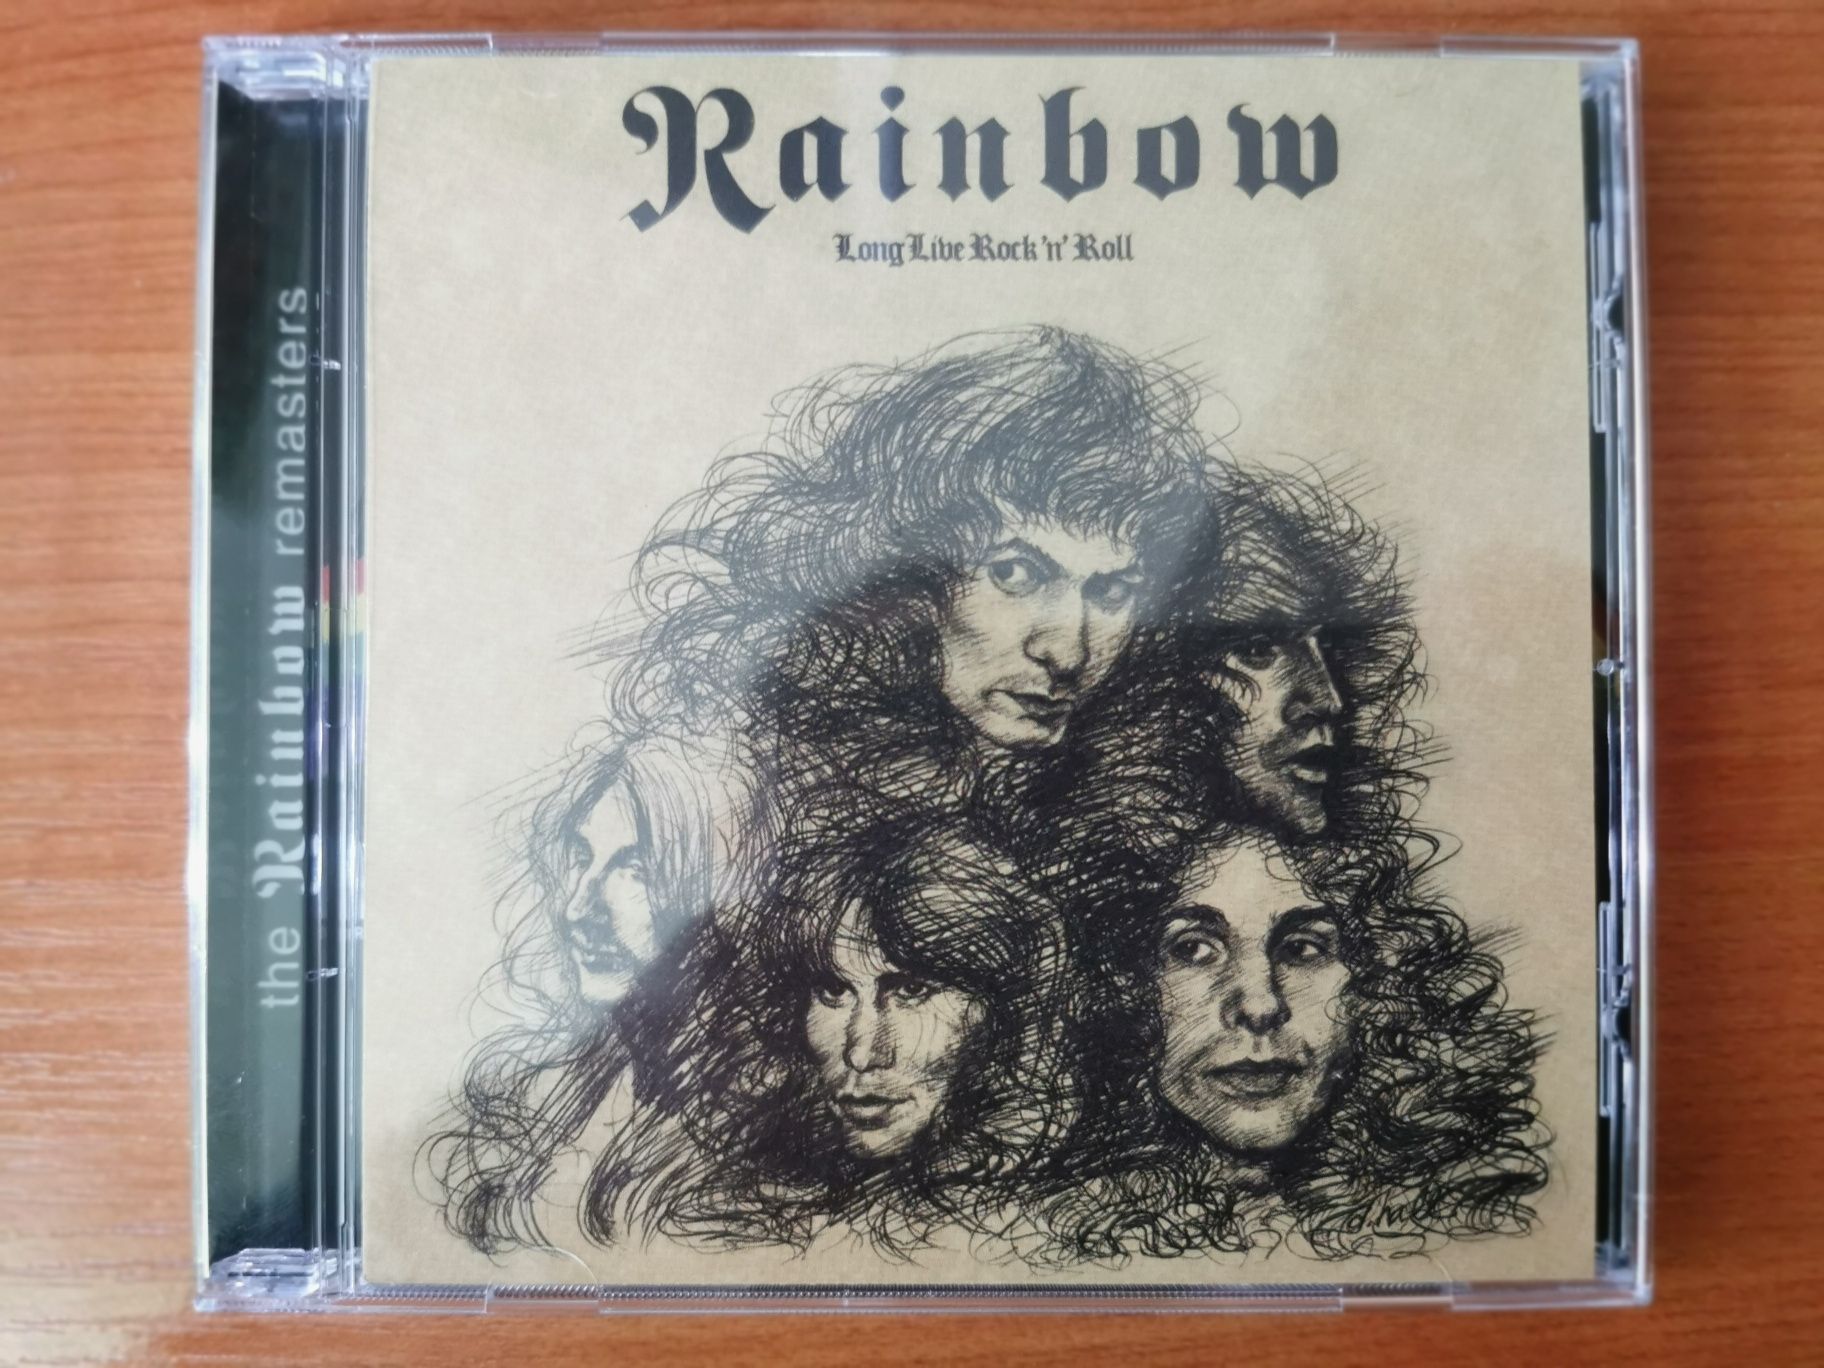 Rainbow - Long Live Rock 'n' Roll.